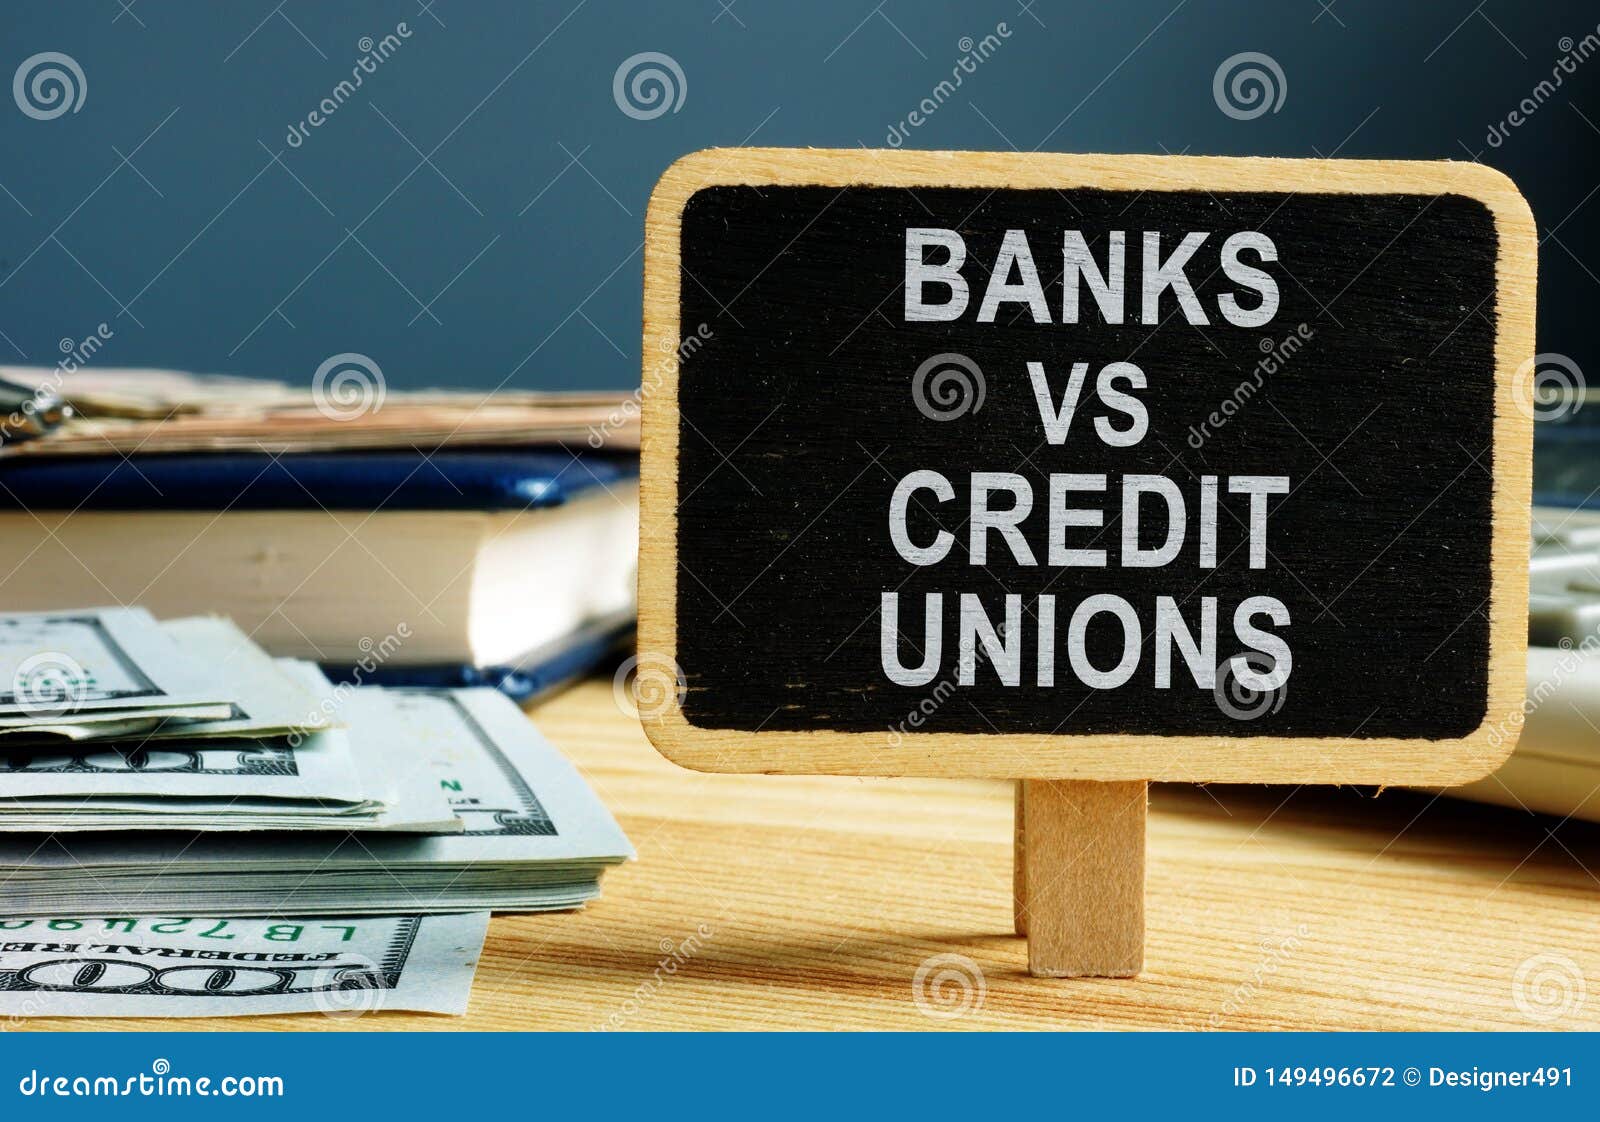 banks vs credit unions concept. money and ledger